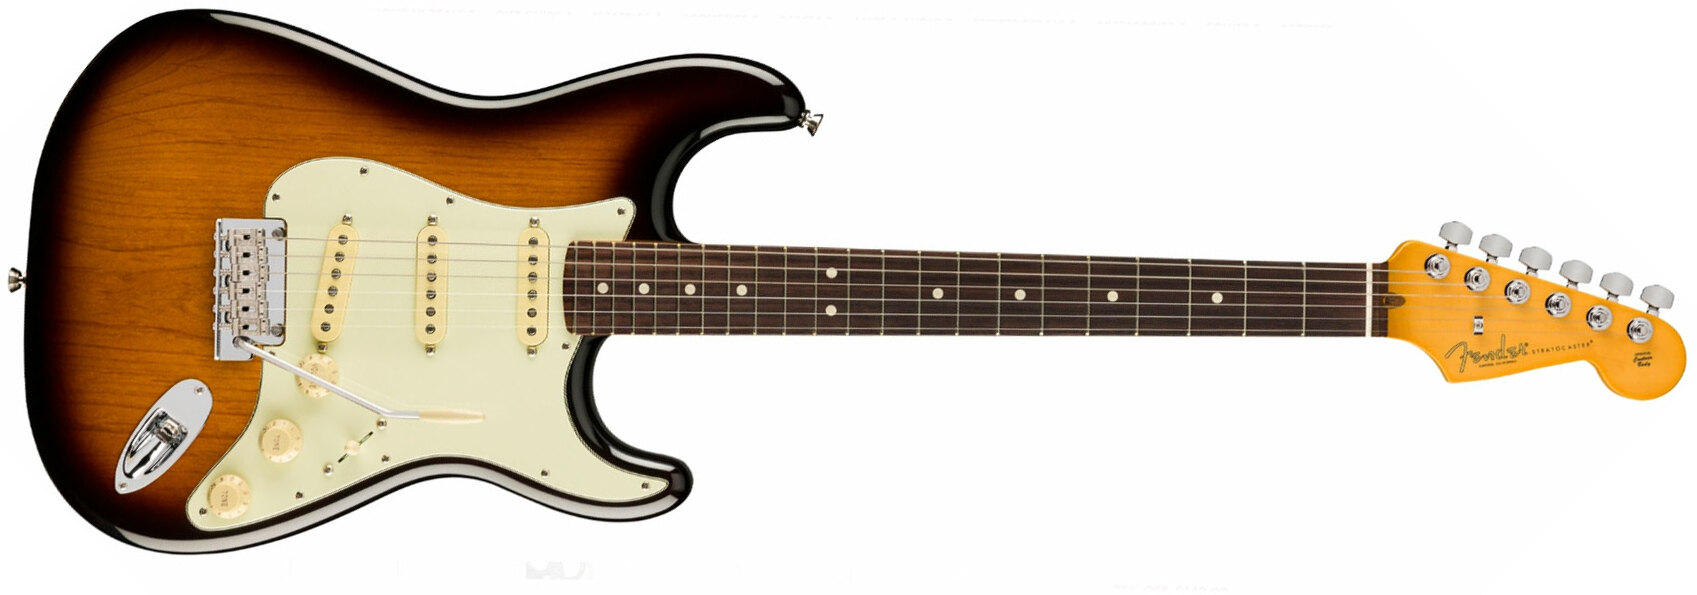 Fender Strat American Professional Ii 70th Anniversary Usa 3s Trem Rw - 2-color Sunburst - Str shape electric guitar - Main picture